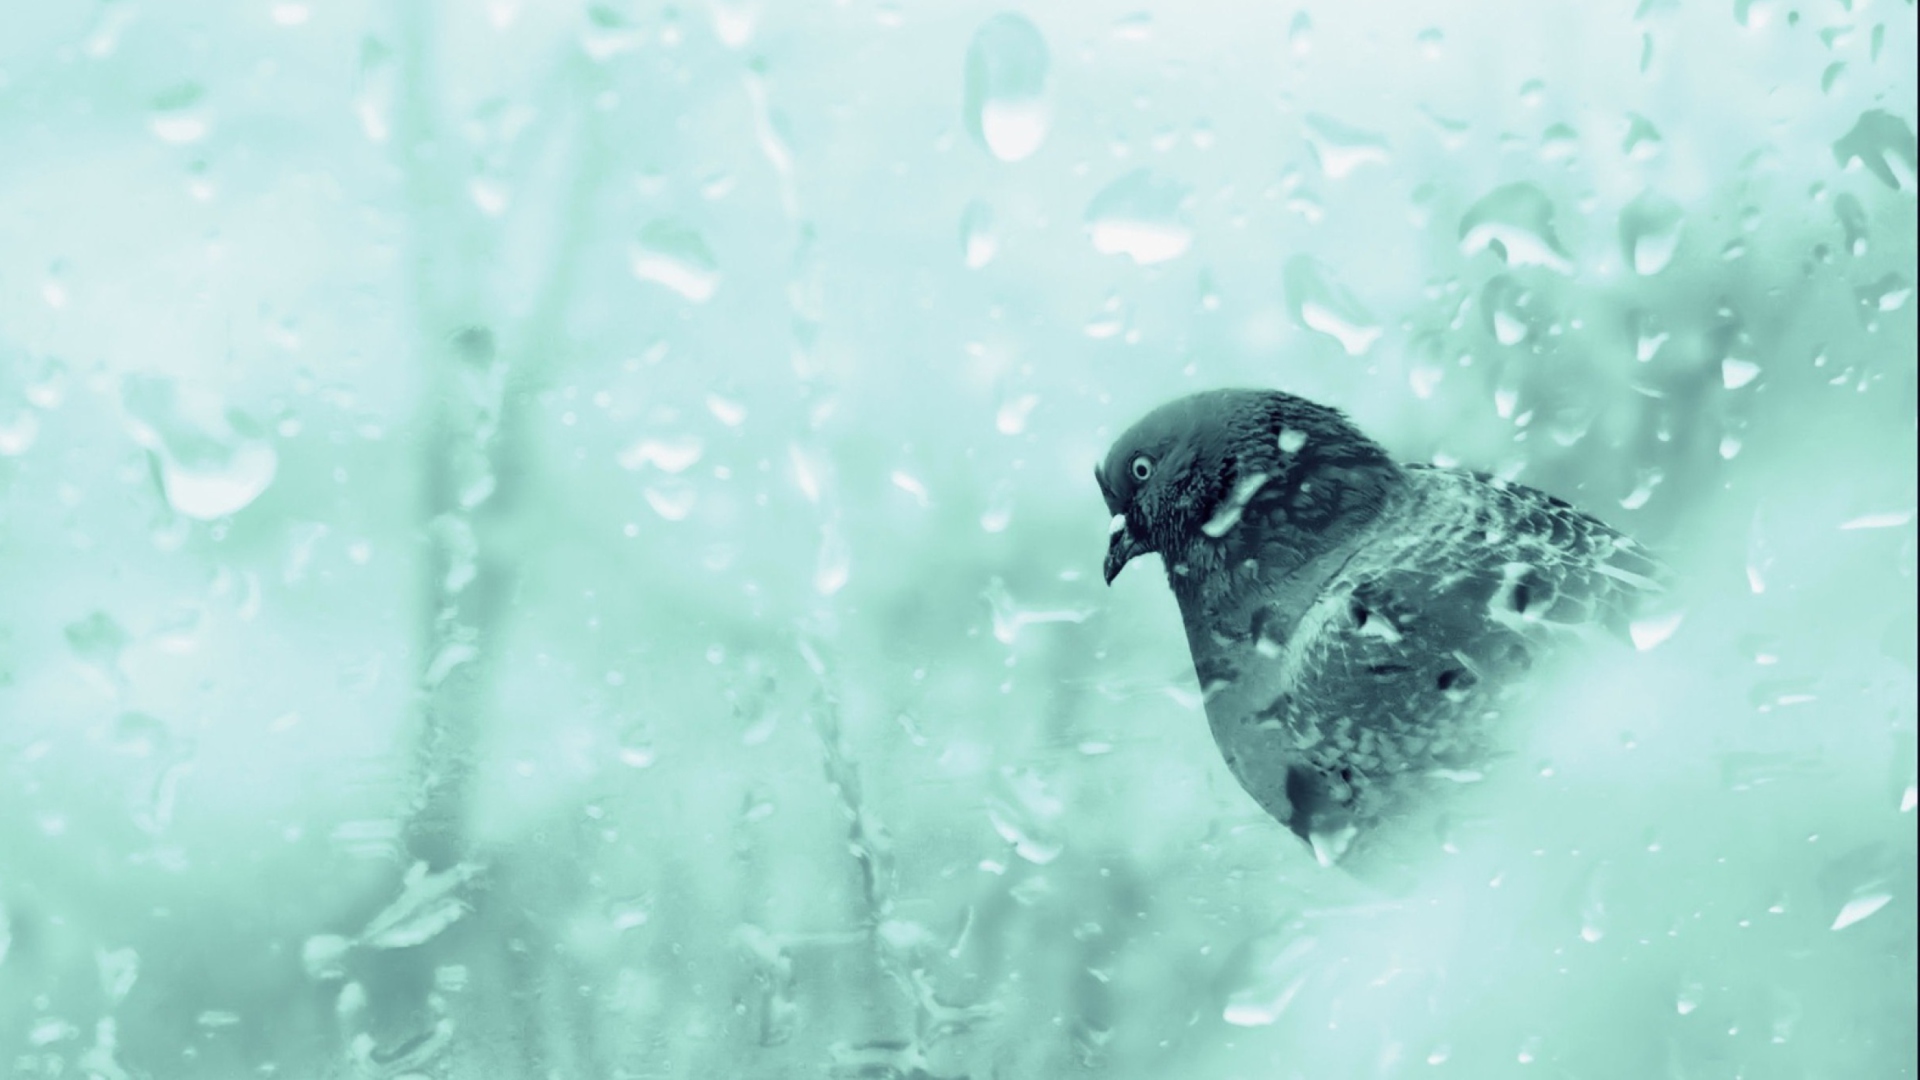 Pigeon In Rain Drops wallpaper 1920x1080